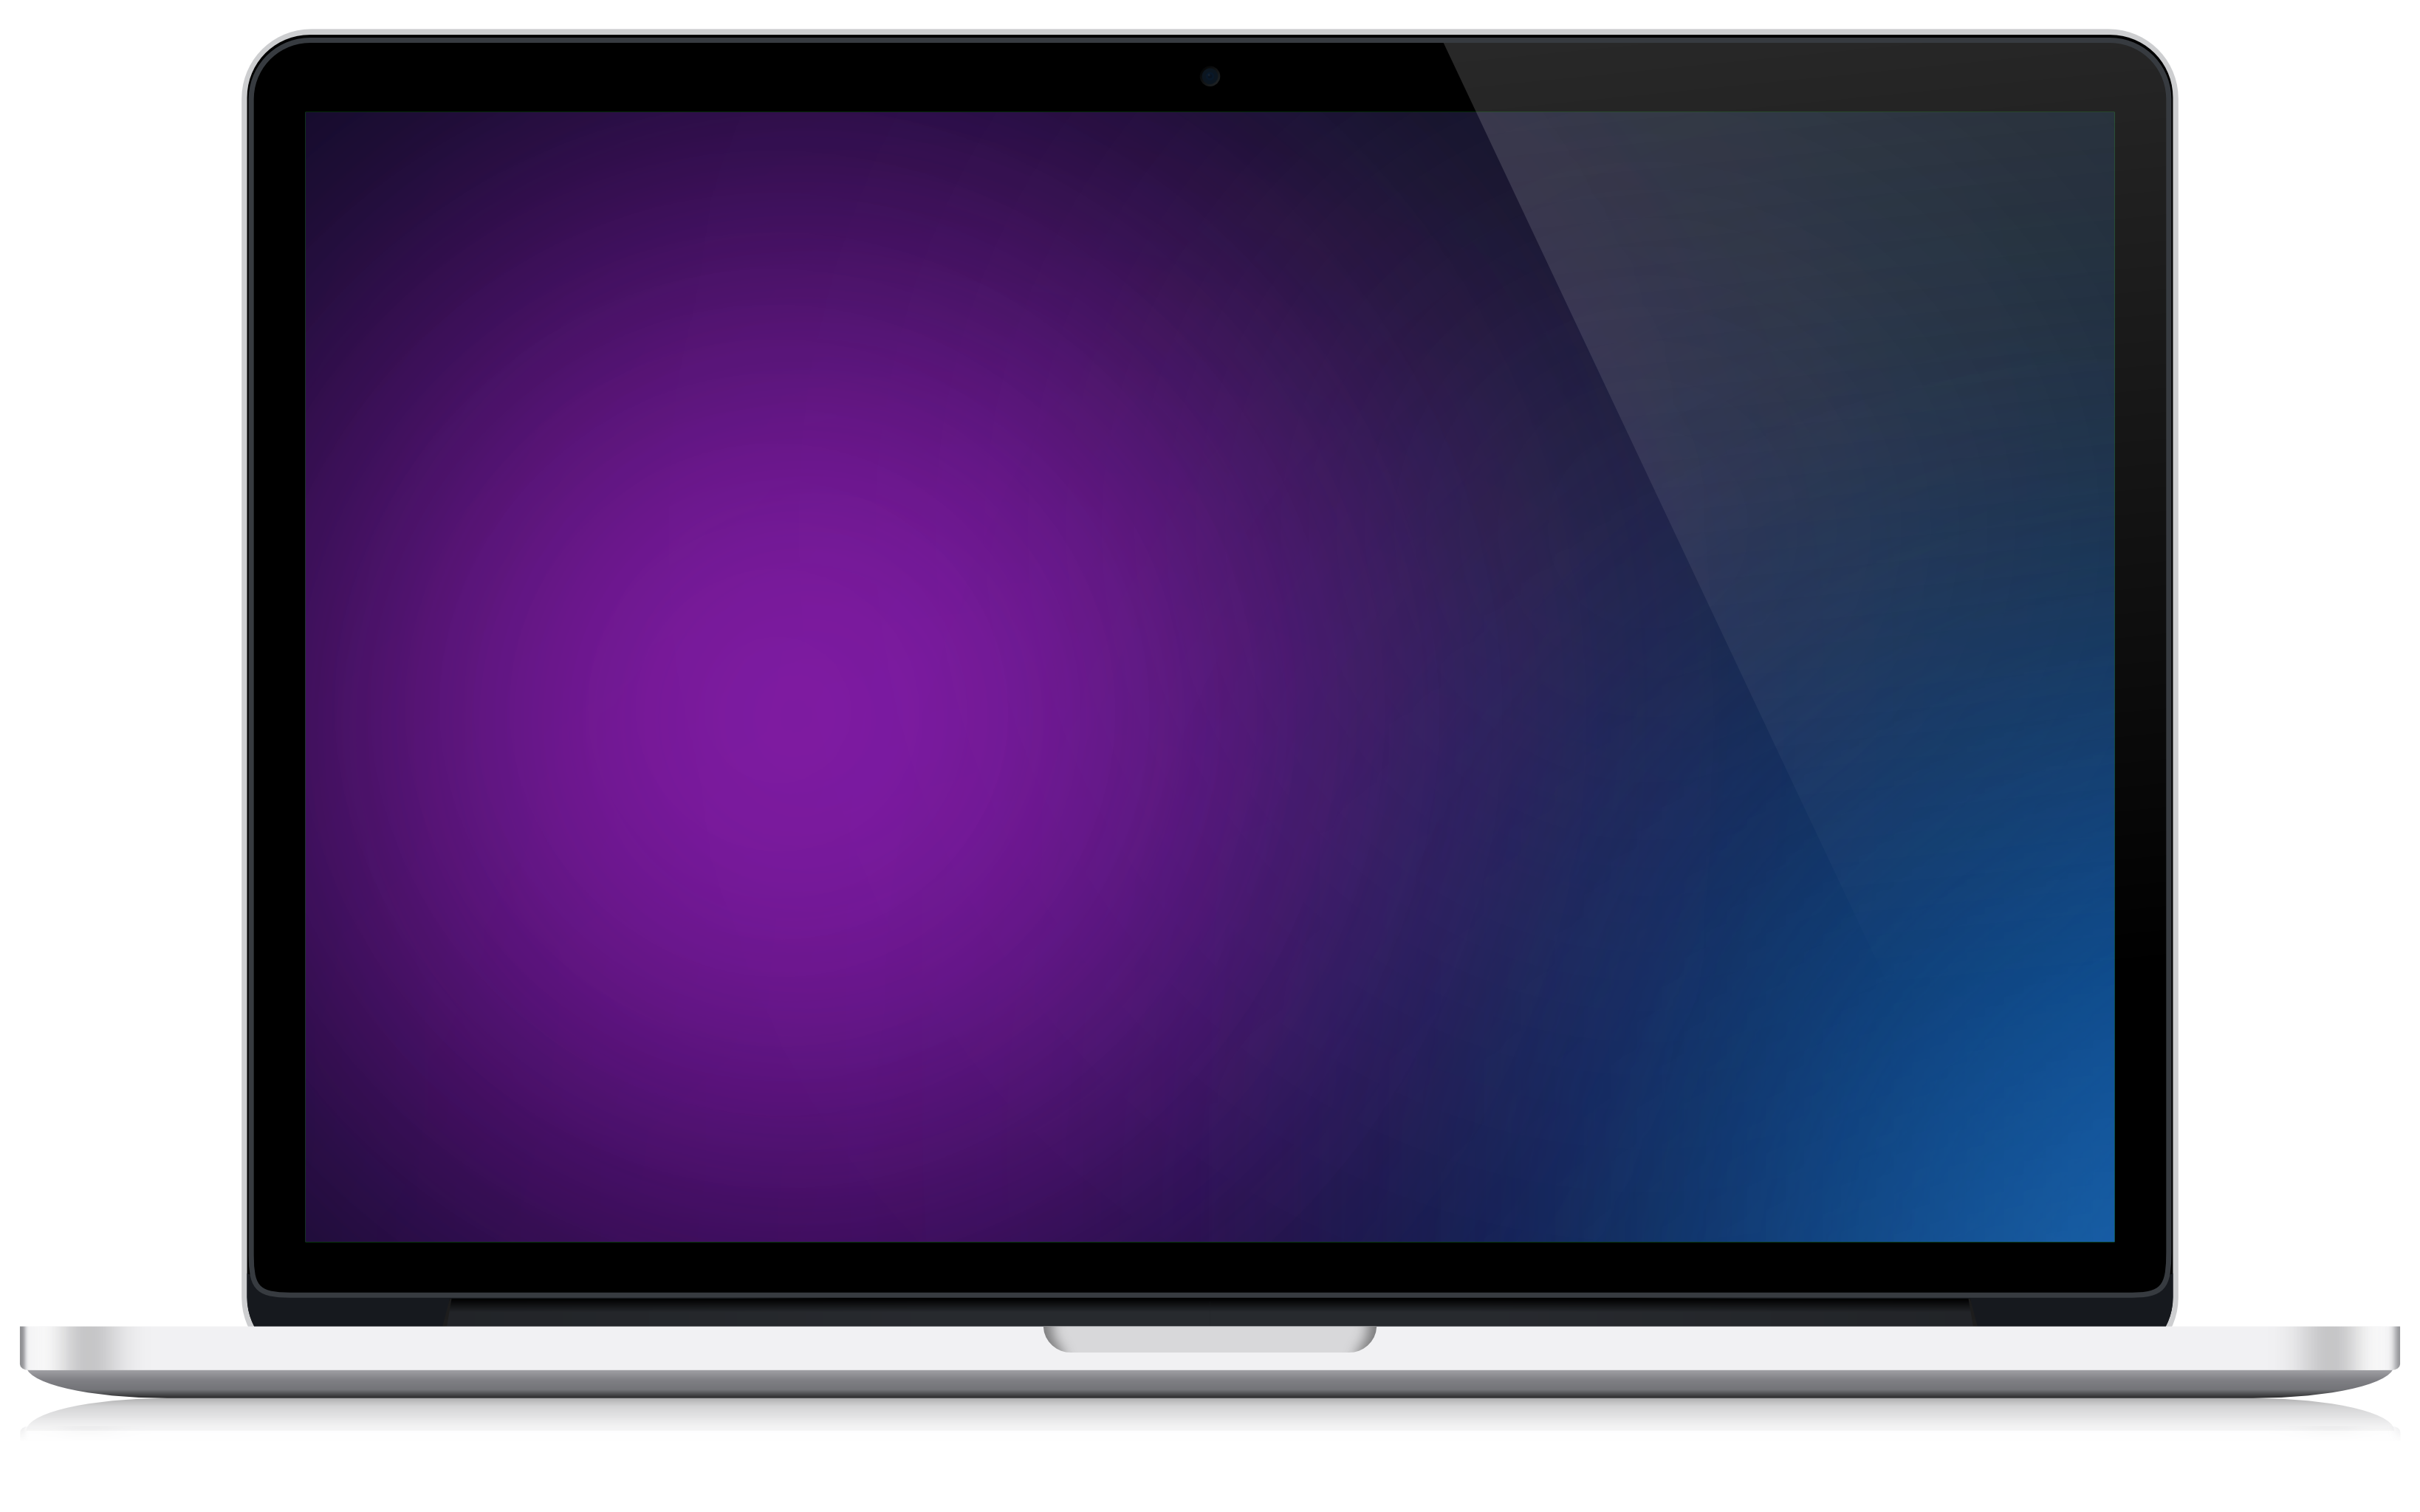 Macbook Pro Retina Display By Thegoldenbox